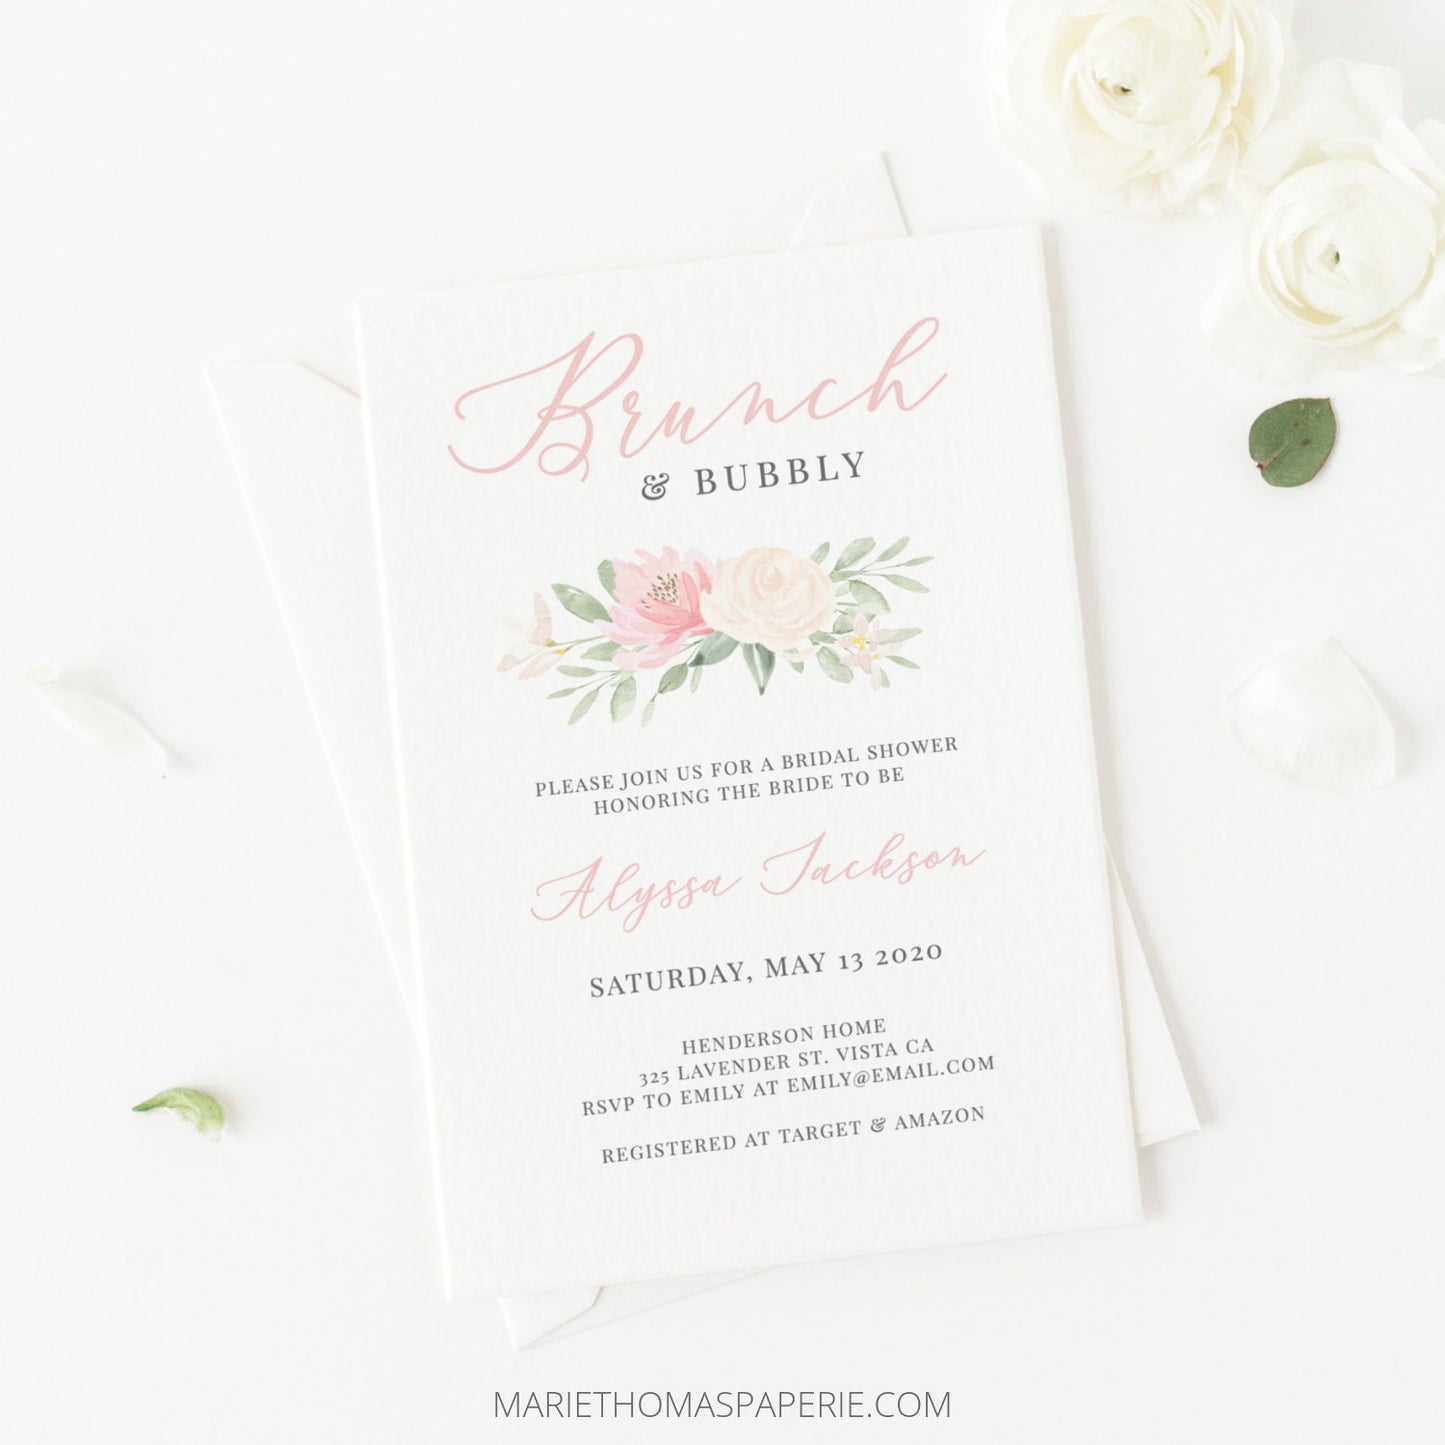 Editable Brunch and Bubbly Bridal Shower Invitation Blush Pink Floral Boho Bridal Shower Invite Template